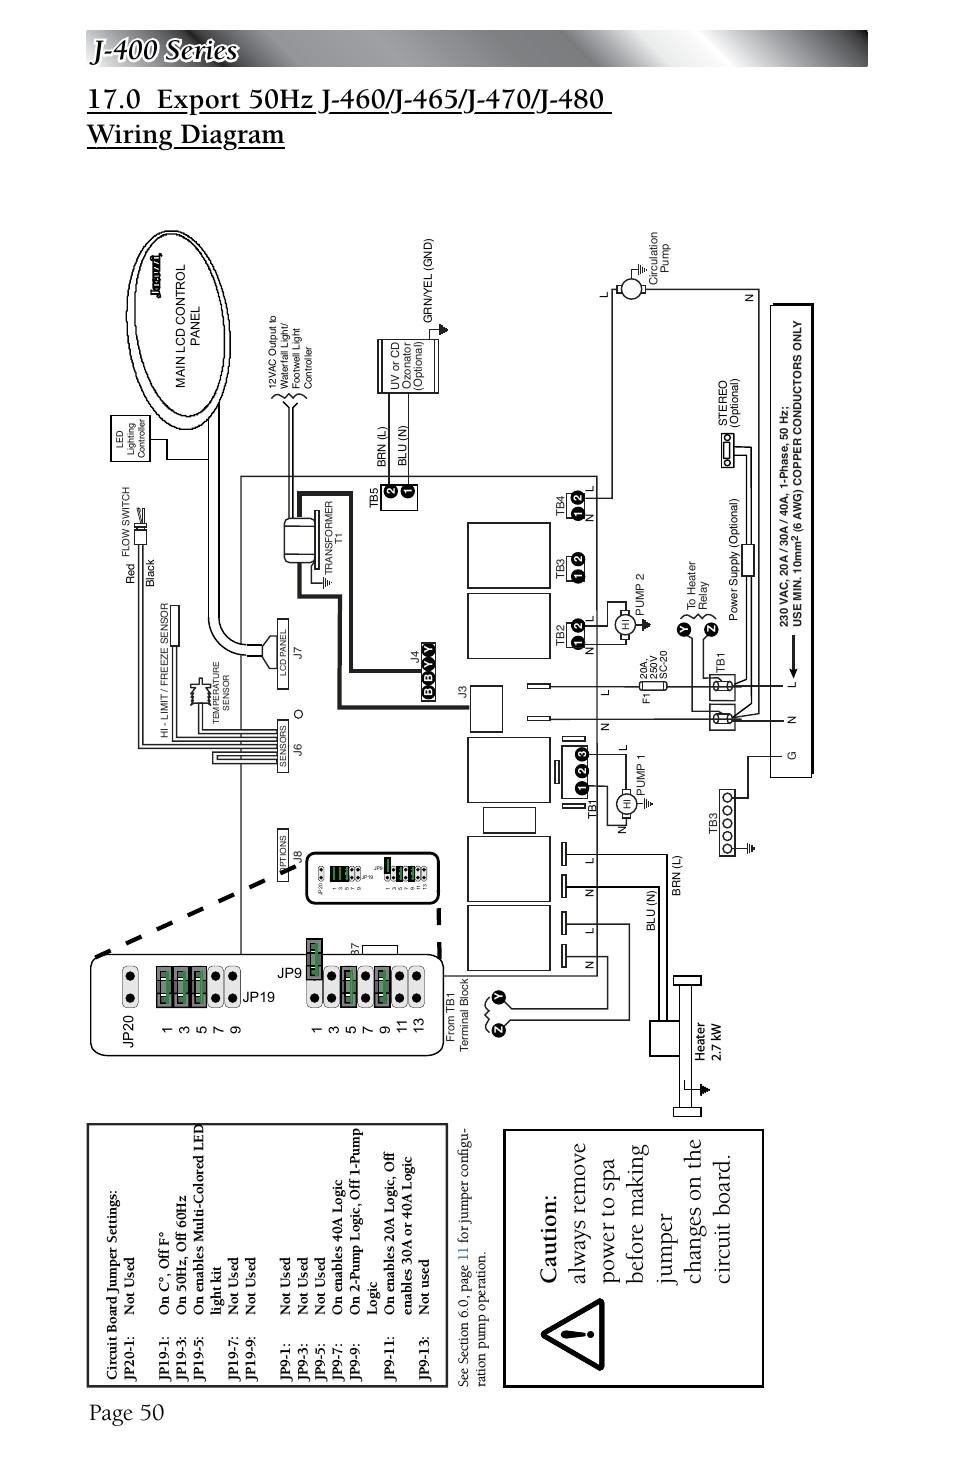 Heat Pump Control Wiring Diagram from mainetreasurechest.com